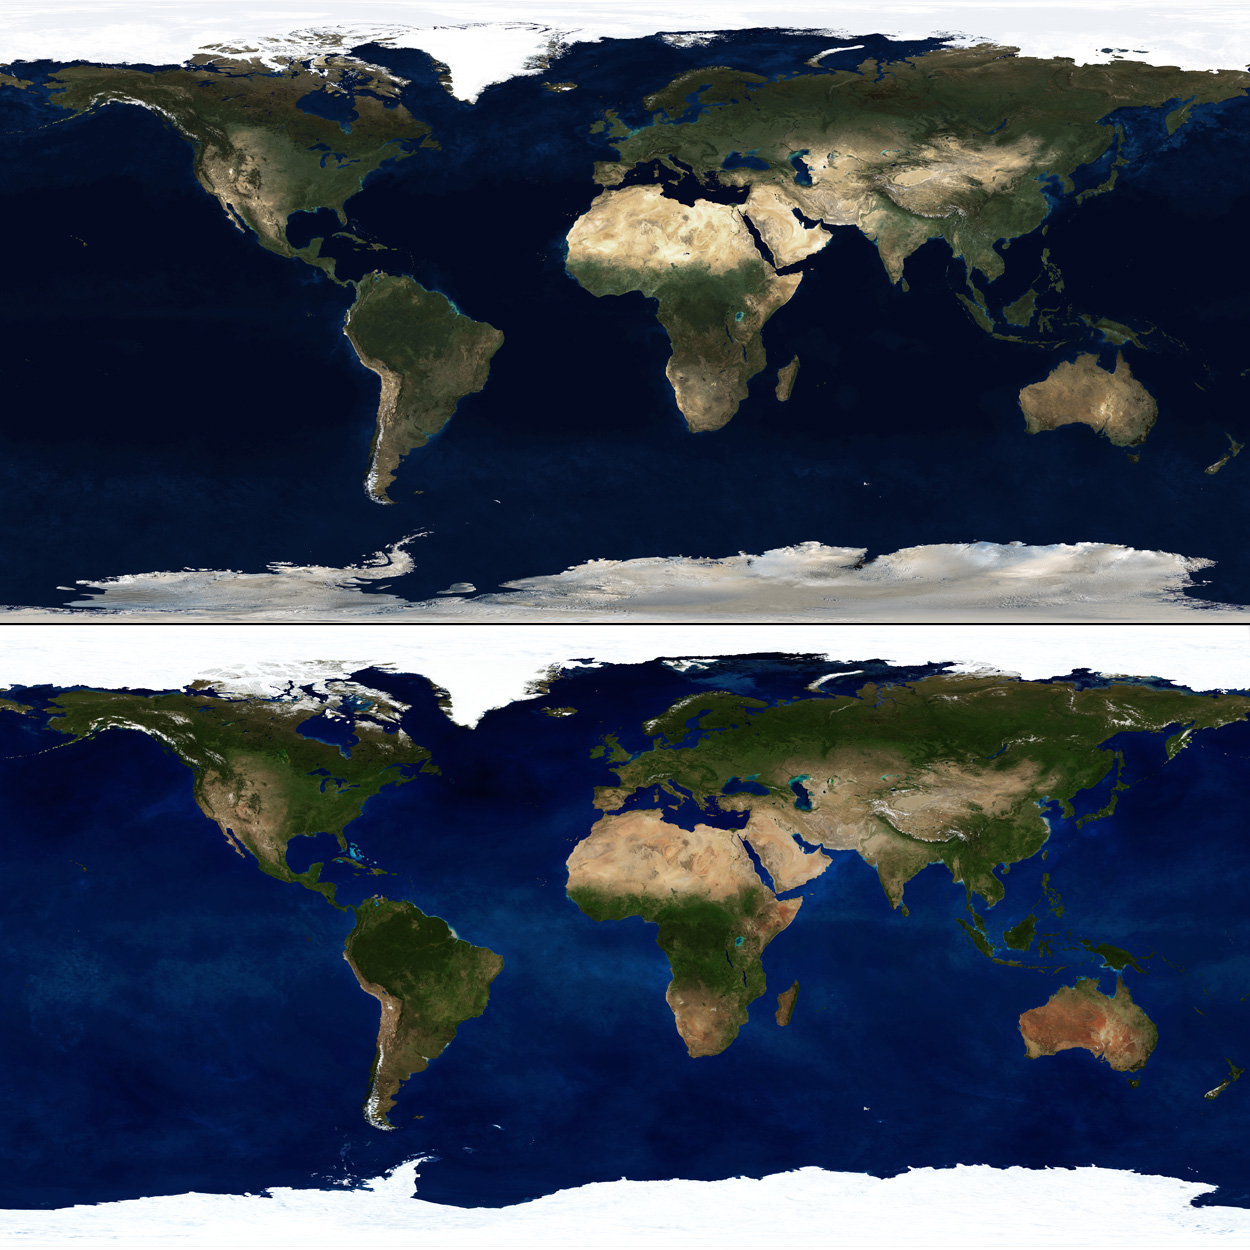 Earth 2020 versus Earth 2016.jpg